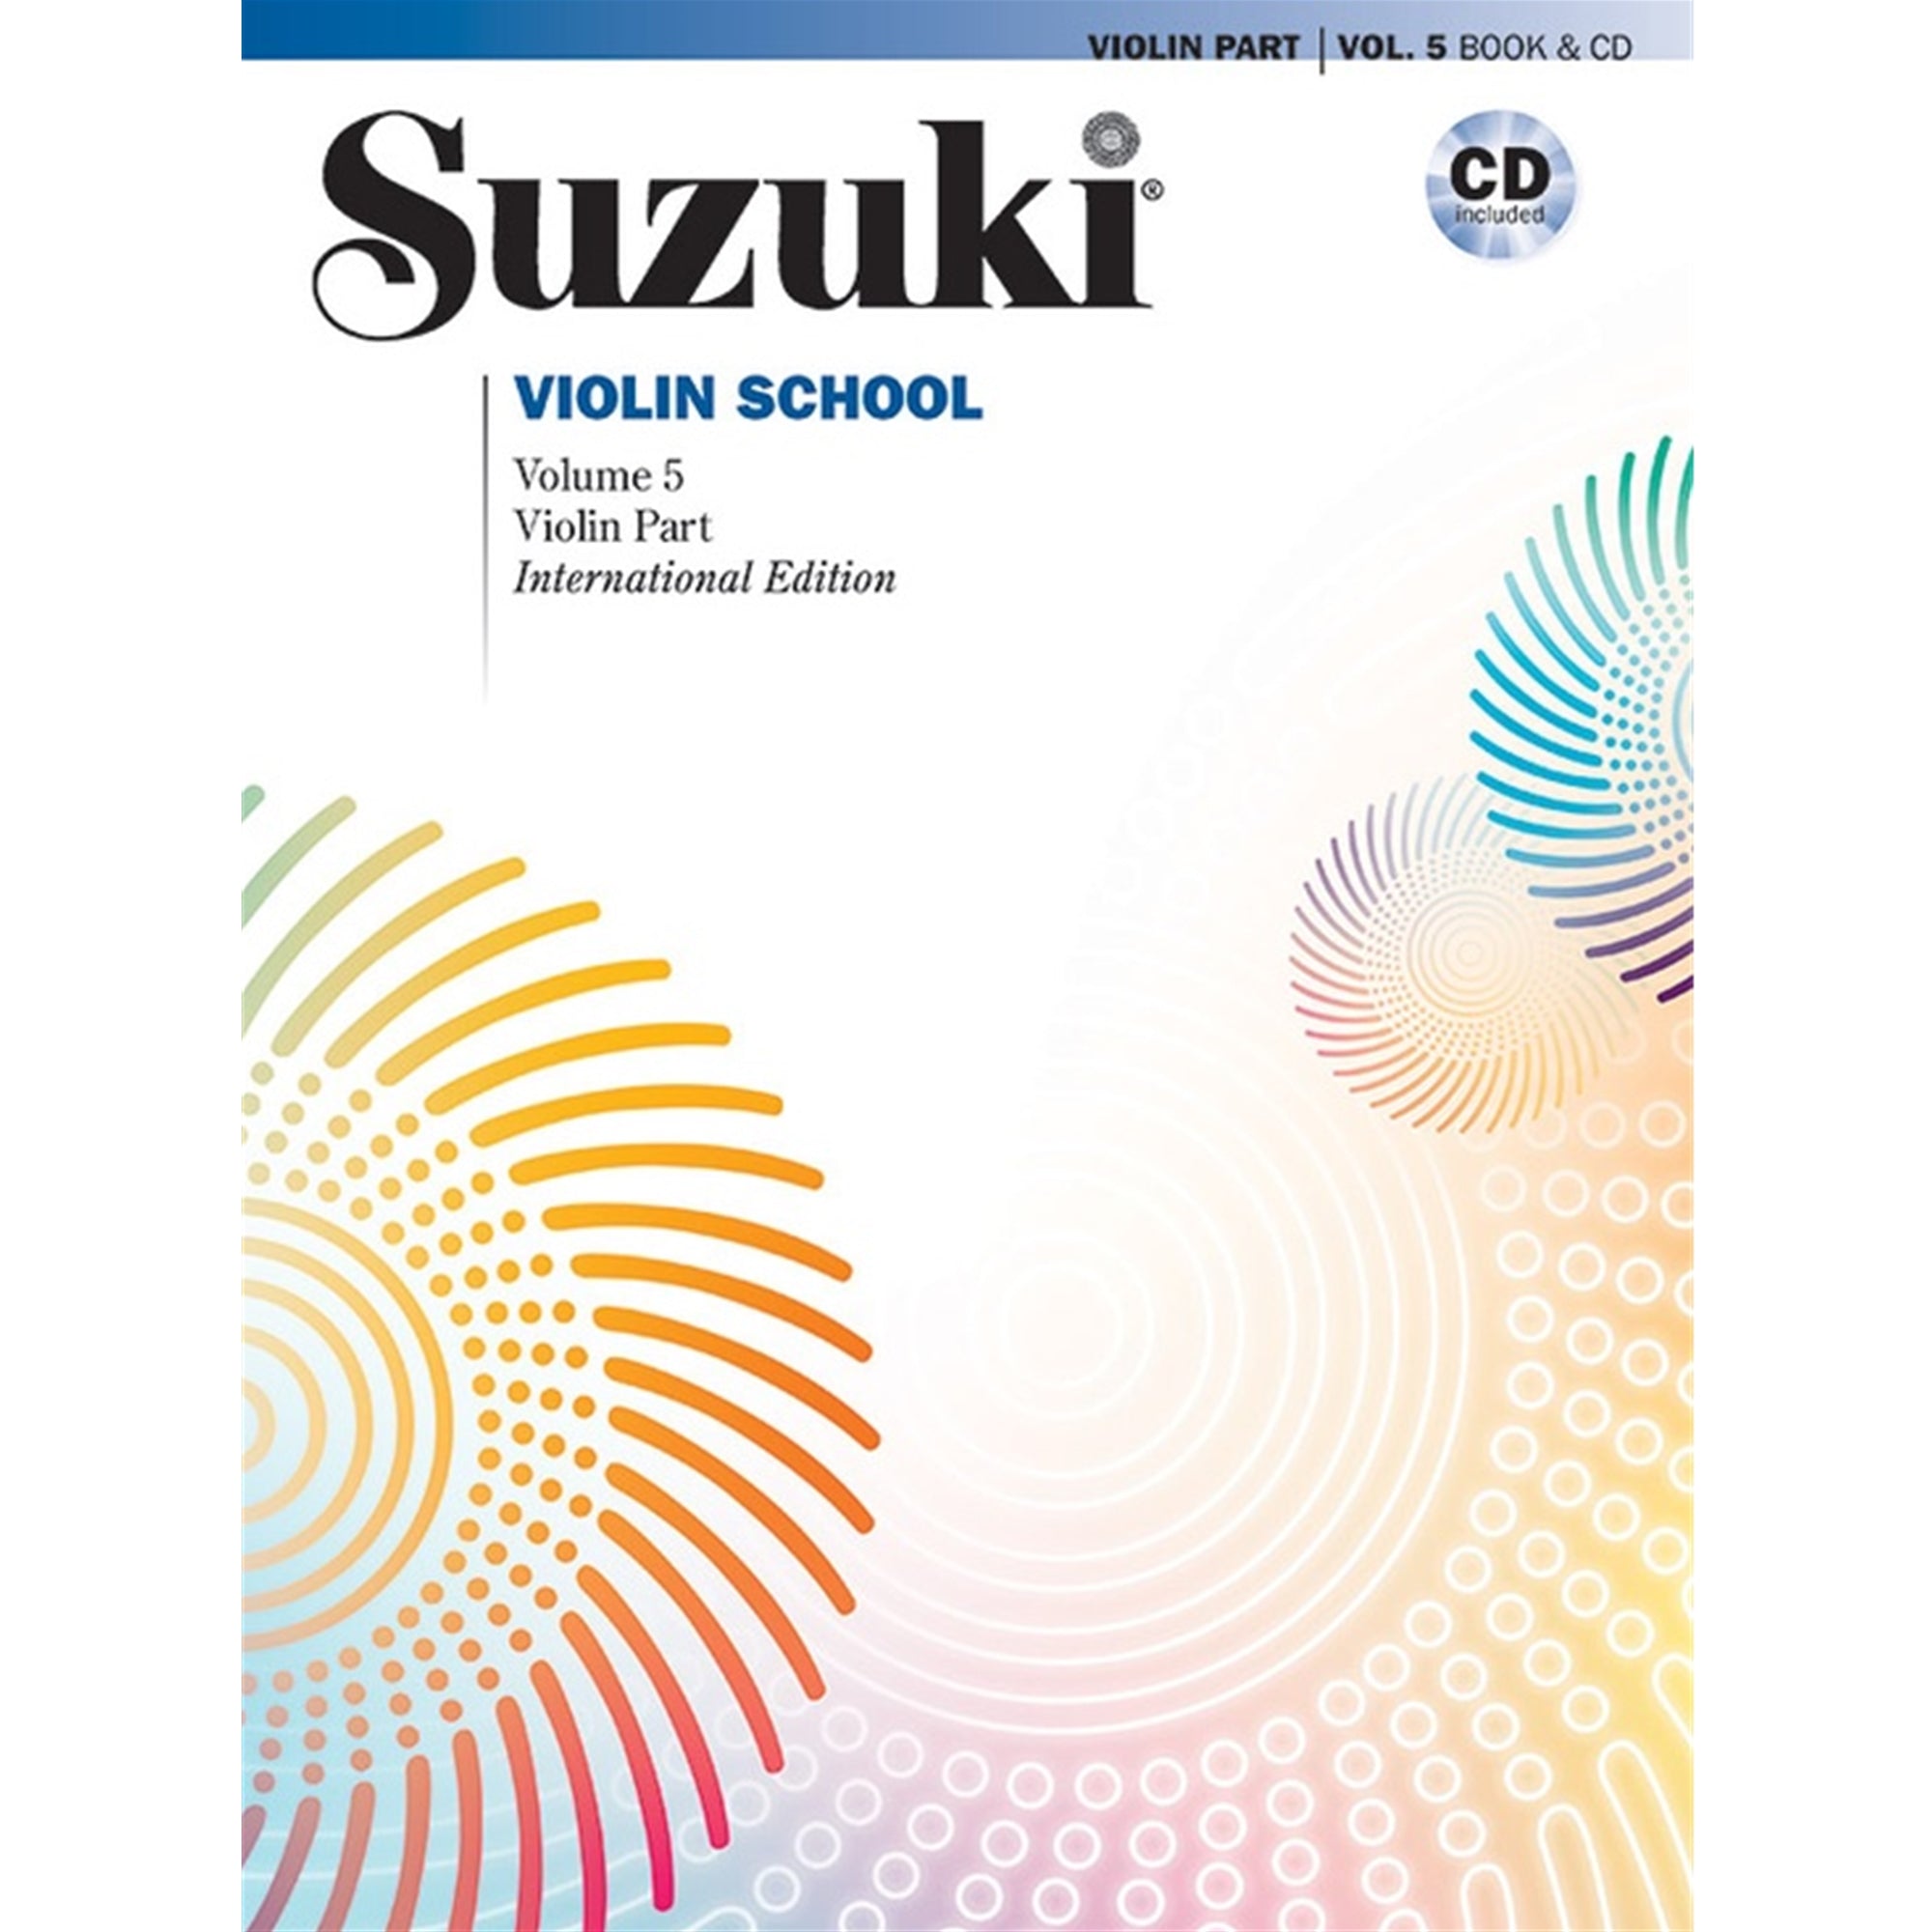 ALFRED 50109 Suzuki Violin School Violin Part & CD, Volume 5 [Violin]